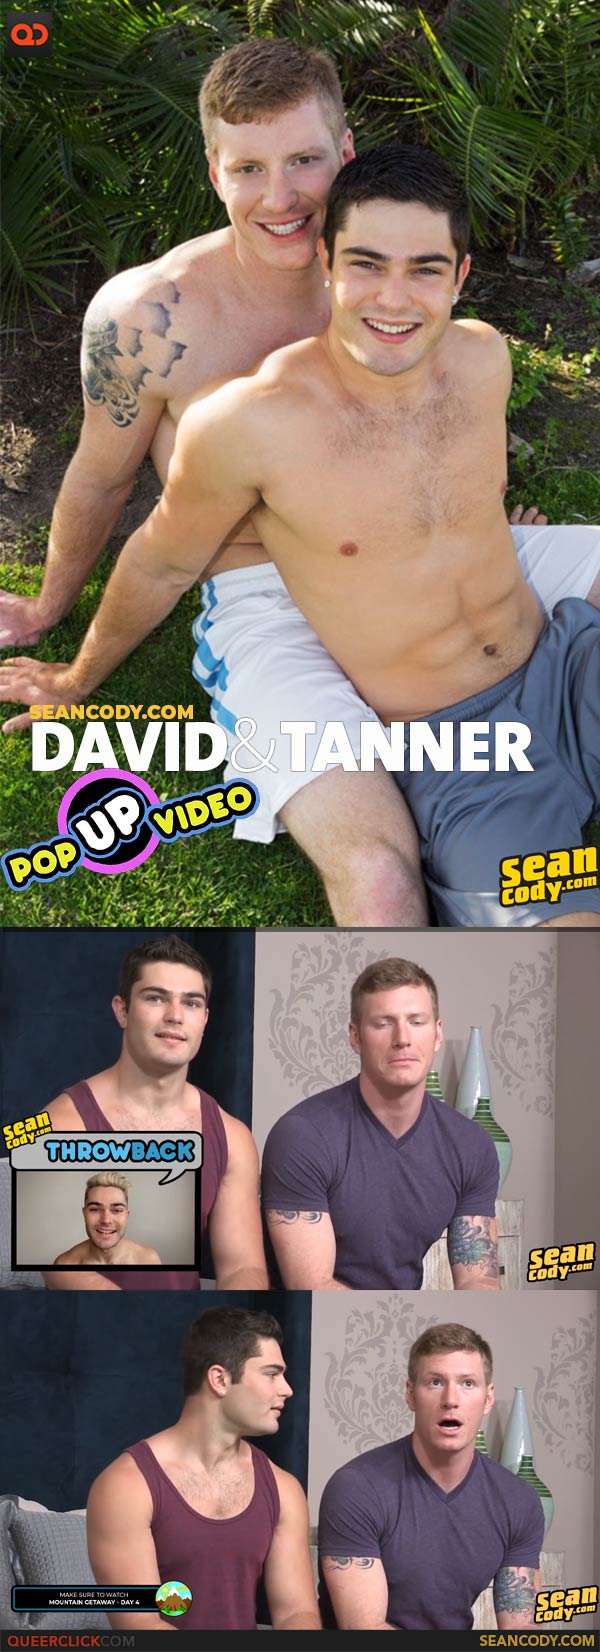 Sean Cody: David and Tanner - POP-UP